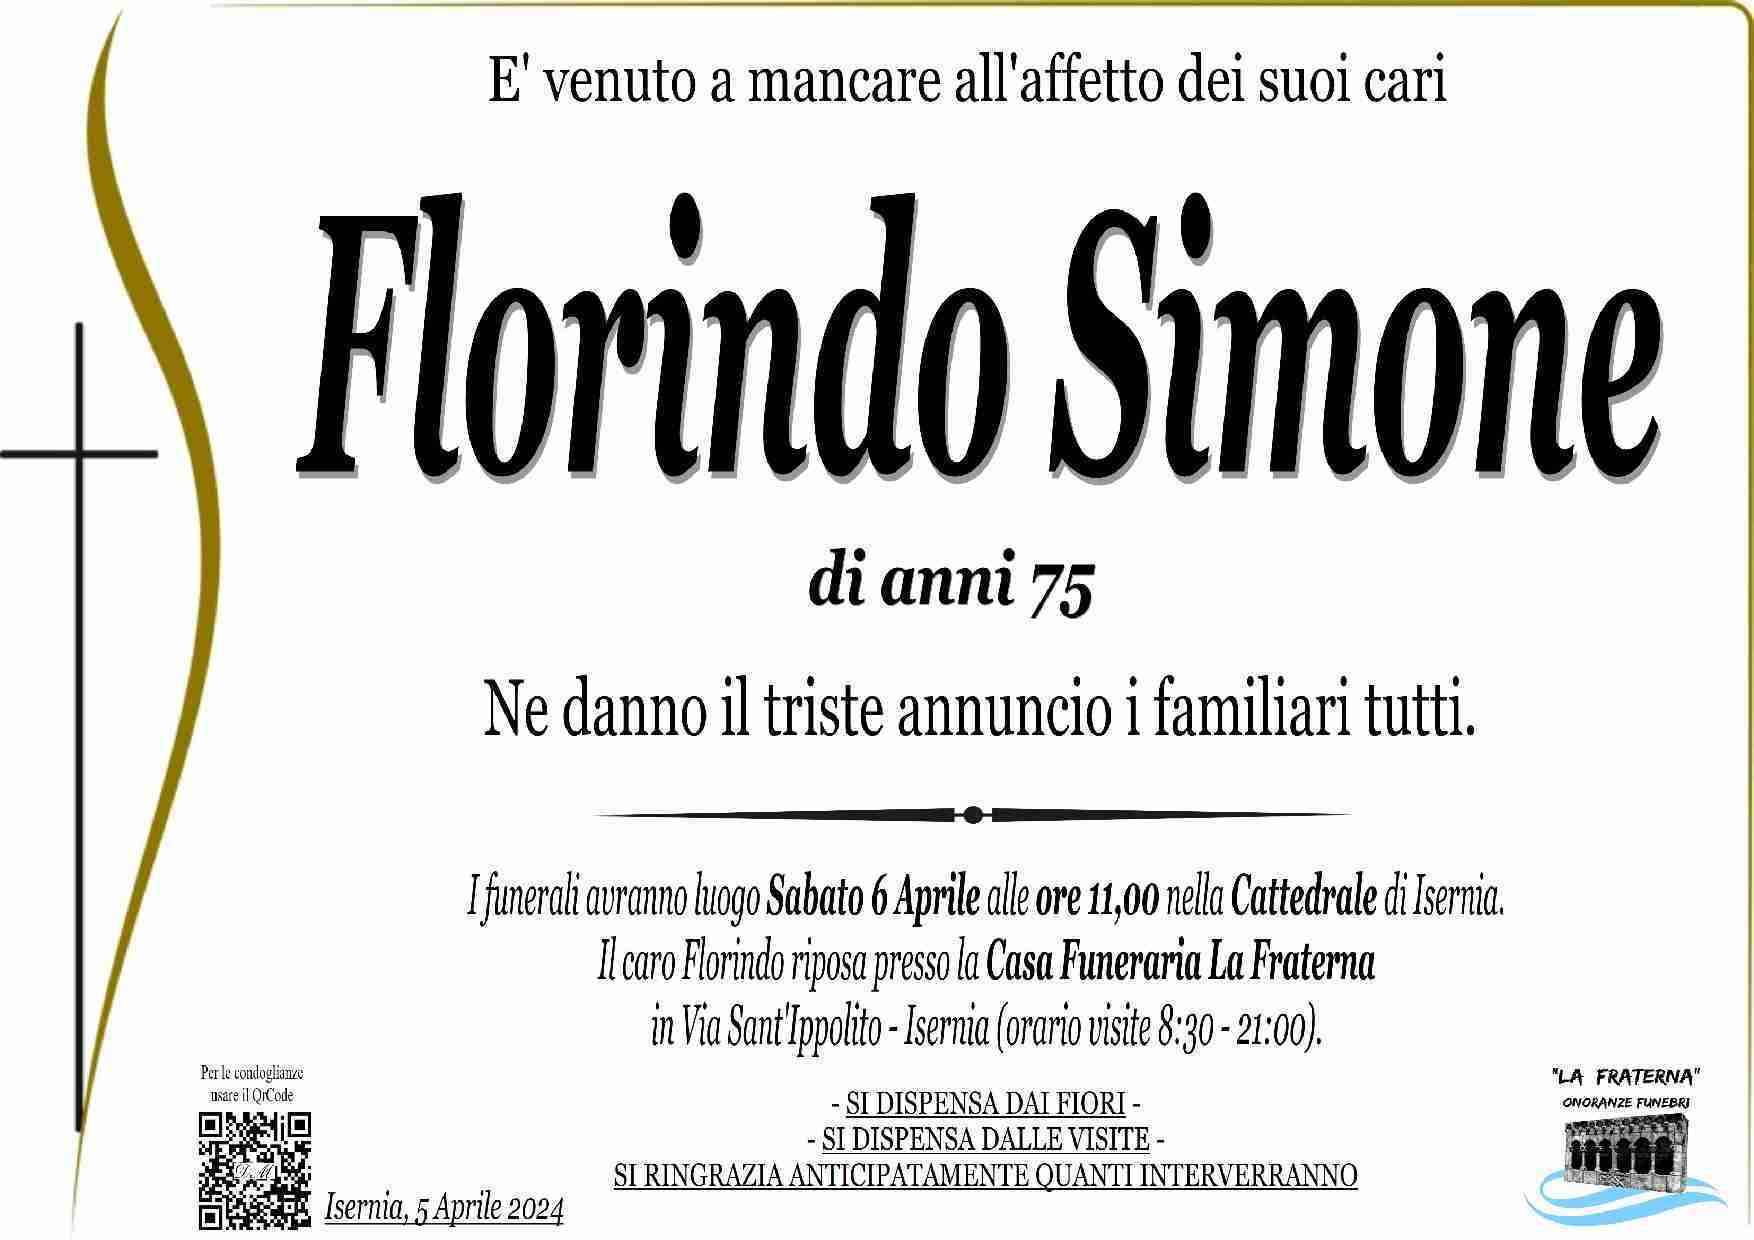 Florindo Simone